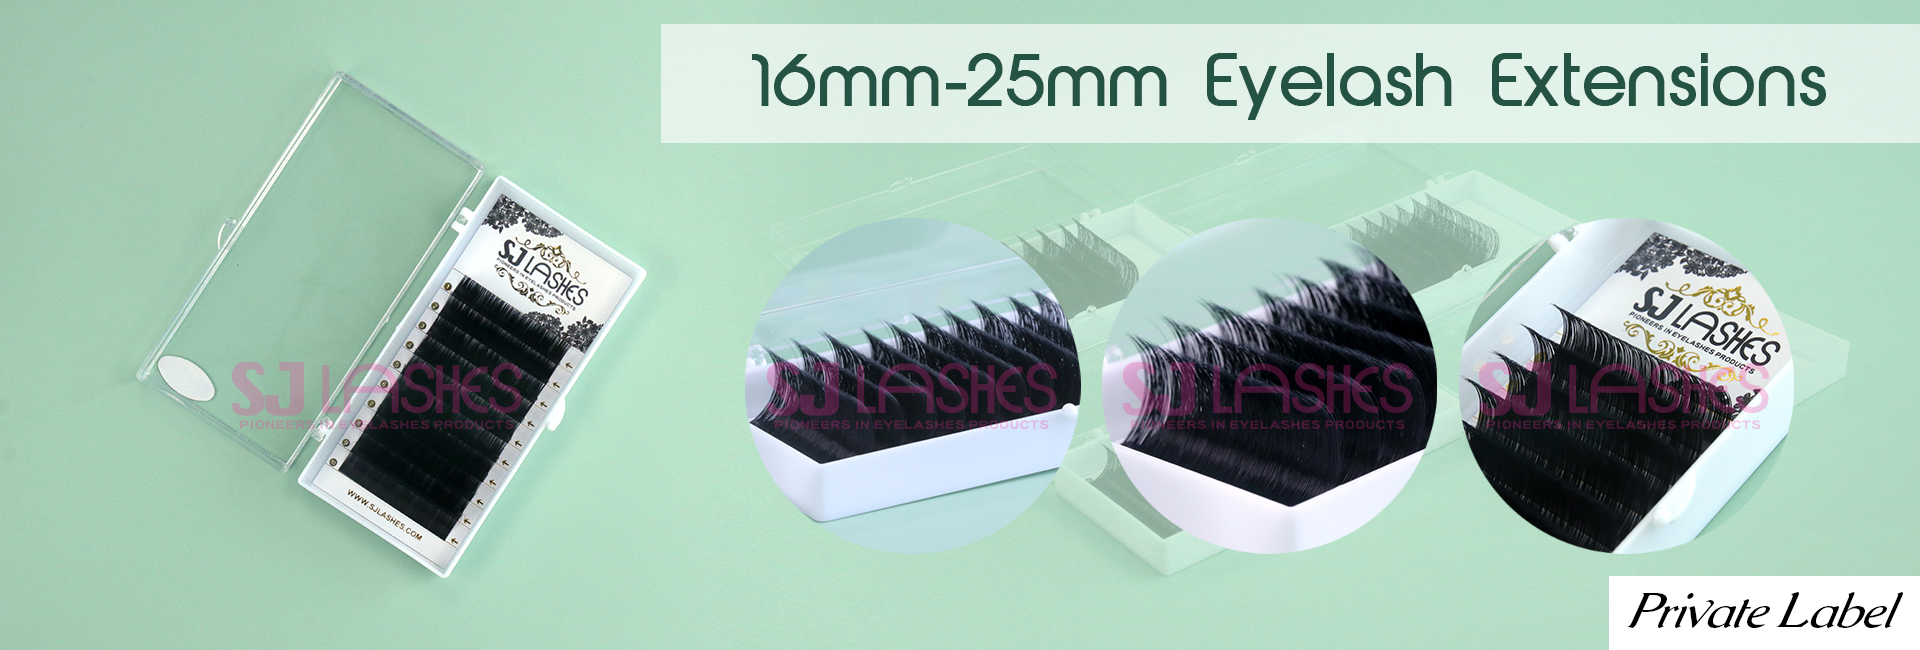 16mm-25mm Eyelash Extensions